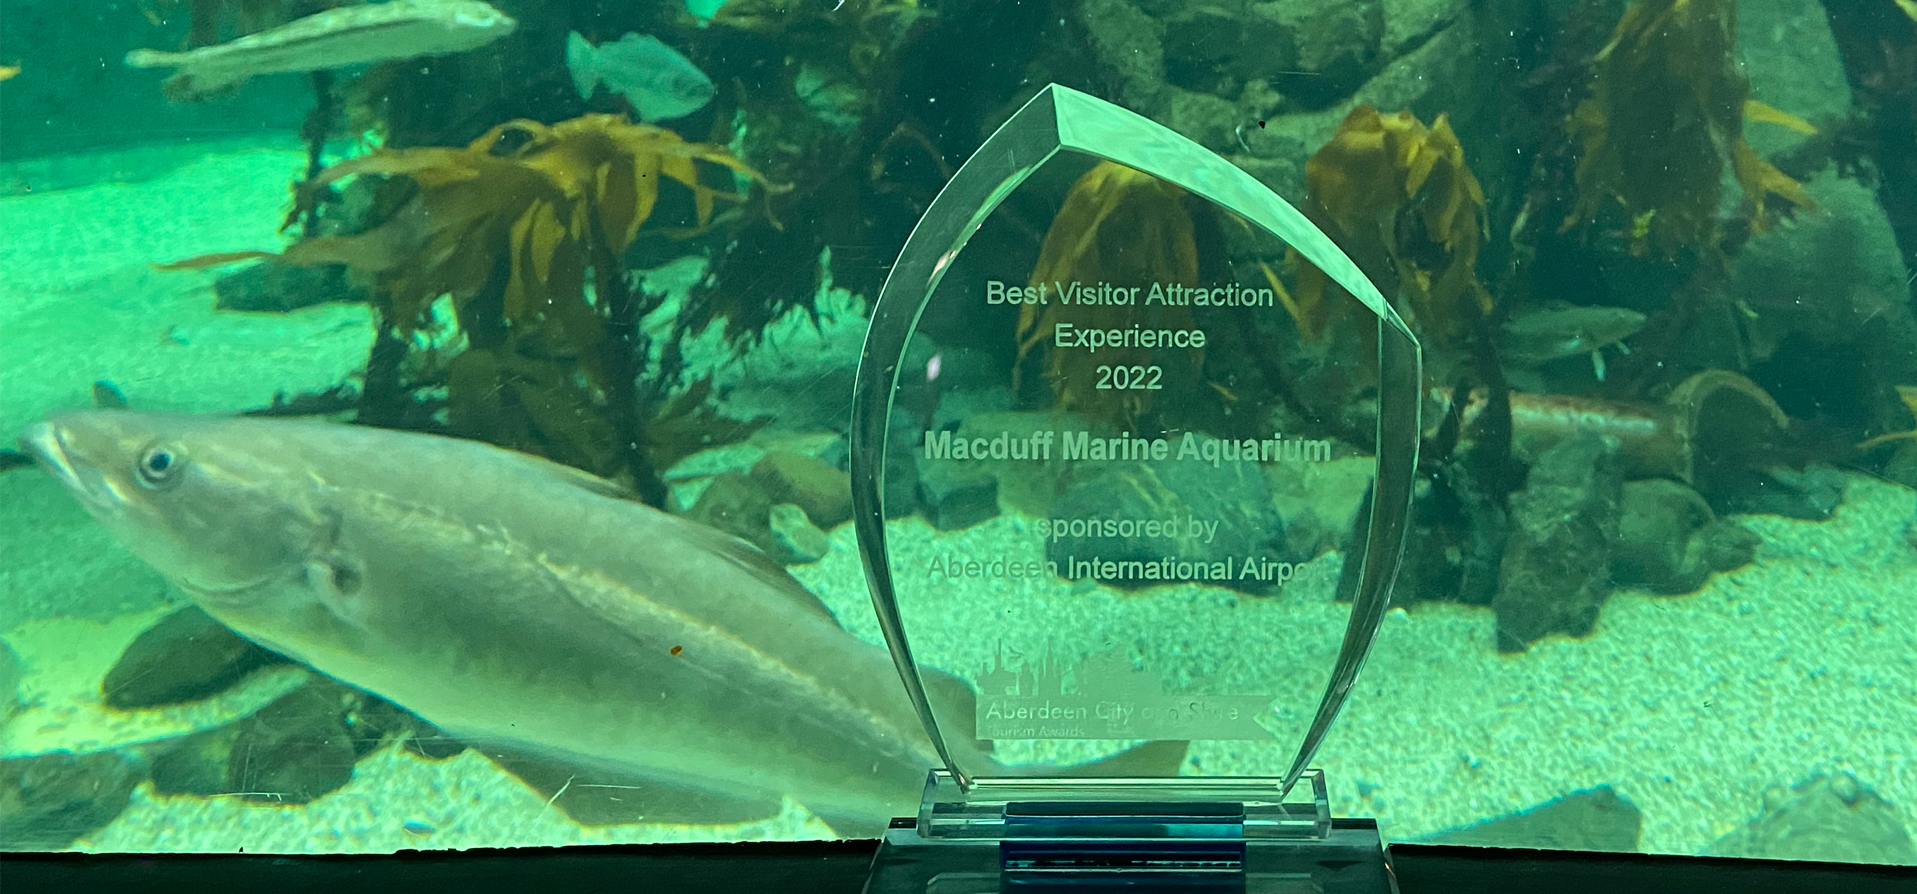 Award trophy in front of aquarium tank